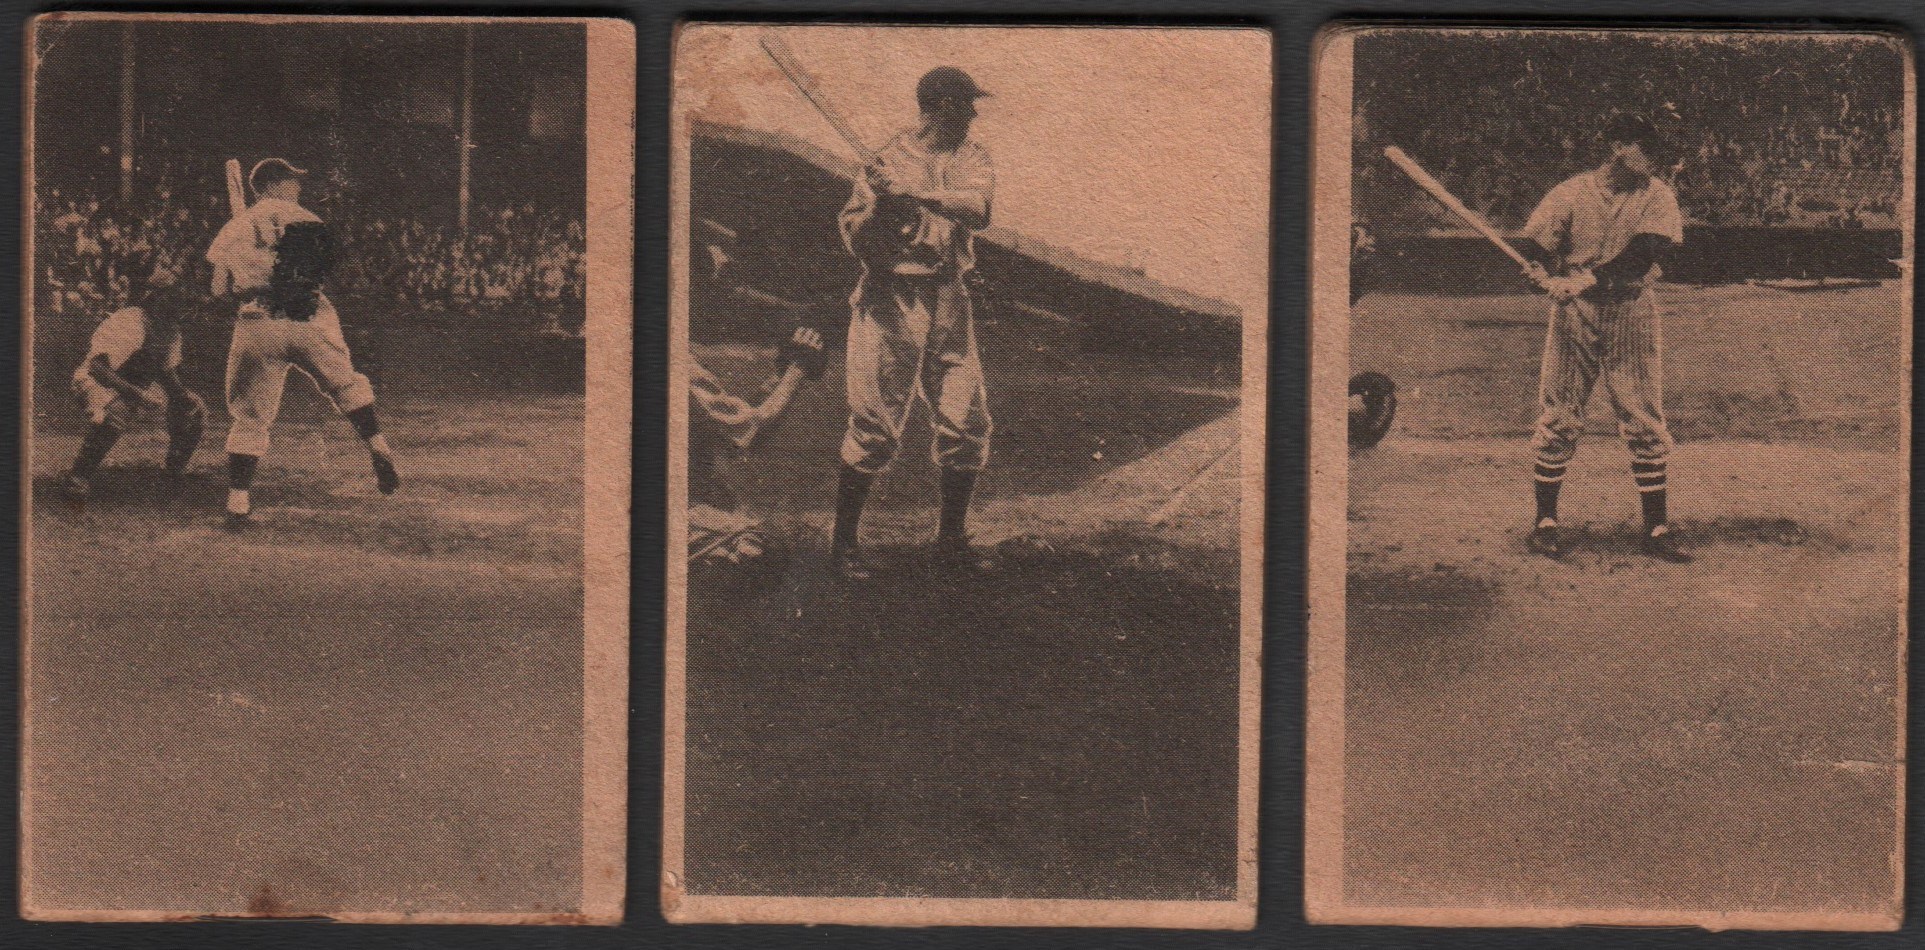 1930s Baseball Flip Book Trio